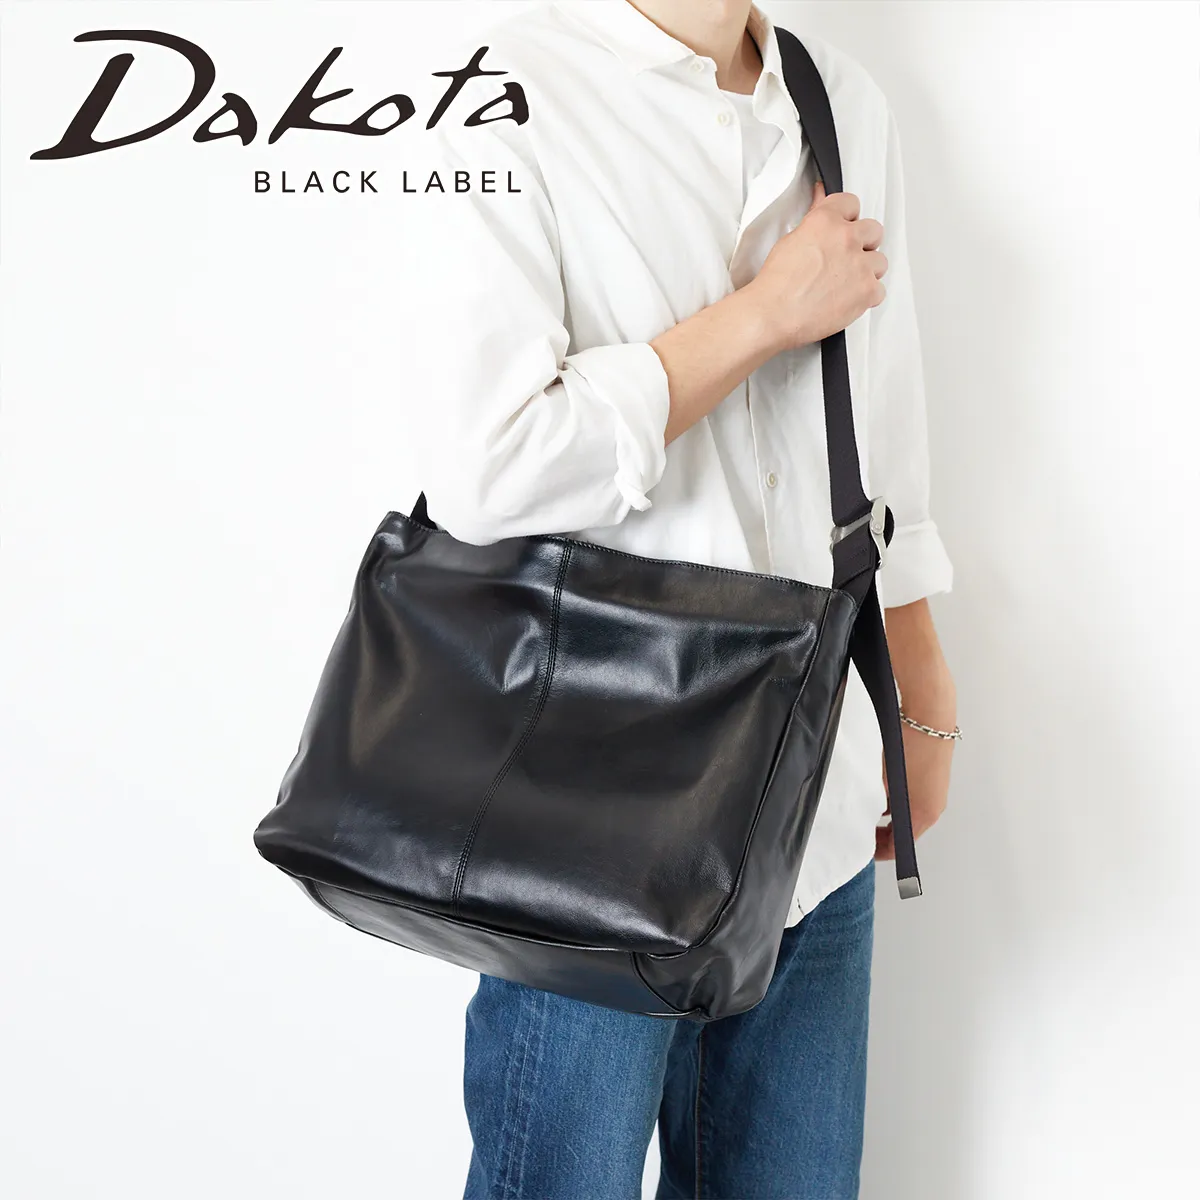 Dakota BLACK LABEL ダコタ ブラックレーベル シュリーマン ショルダーバッグ(L) 1623021